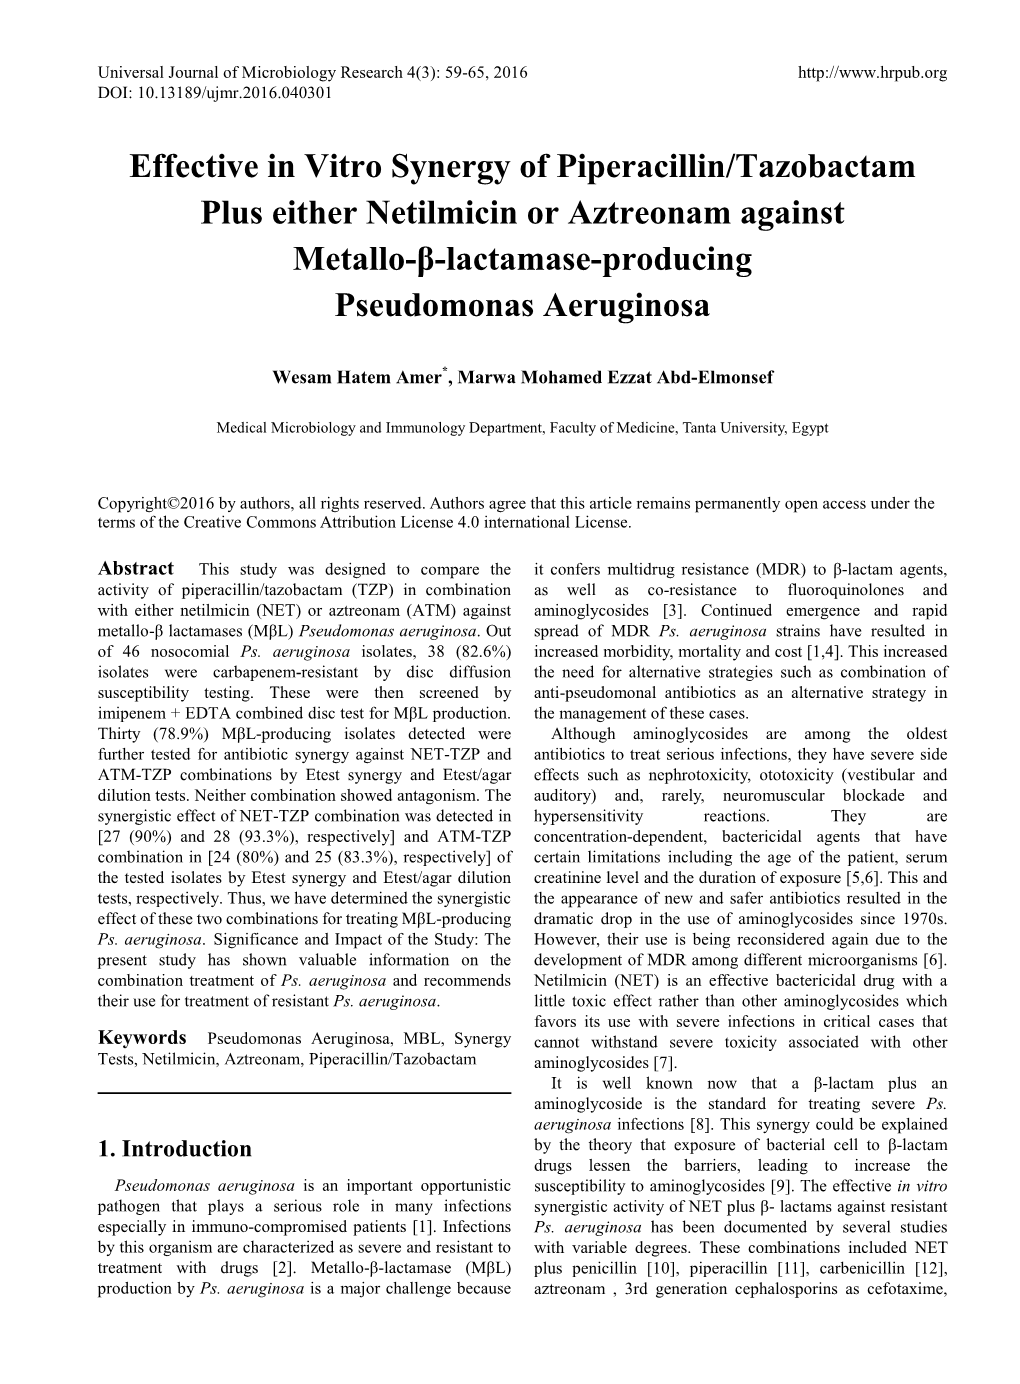 Effective in Vitro Synergy of Piperacillin/Tazobactam Plus Either Netilmicin Or Aztreonam Against Metallo-Β-Lactamase-Producing Pseudomonas Aeruginosa